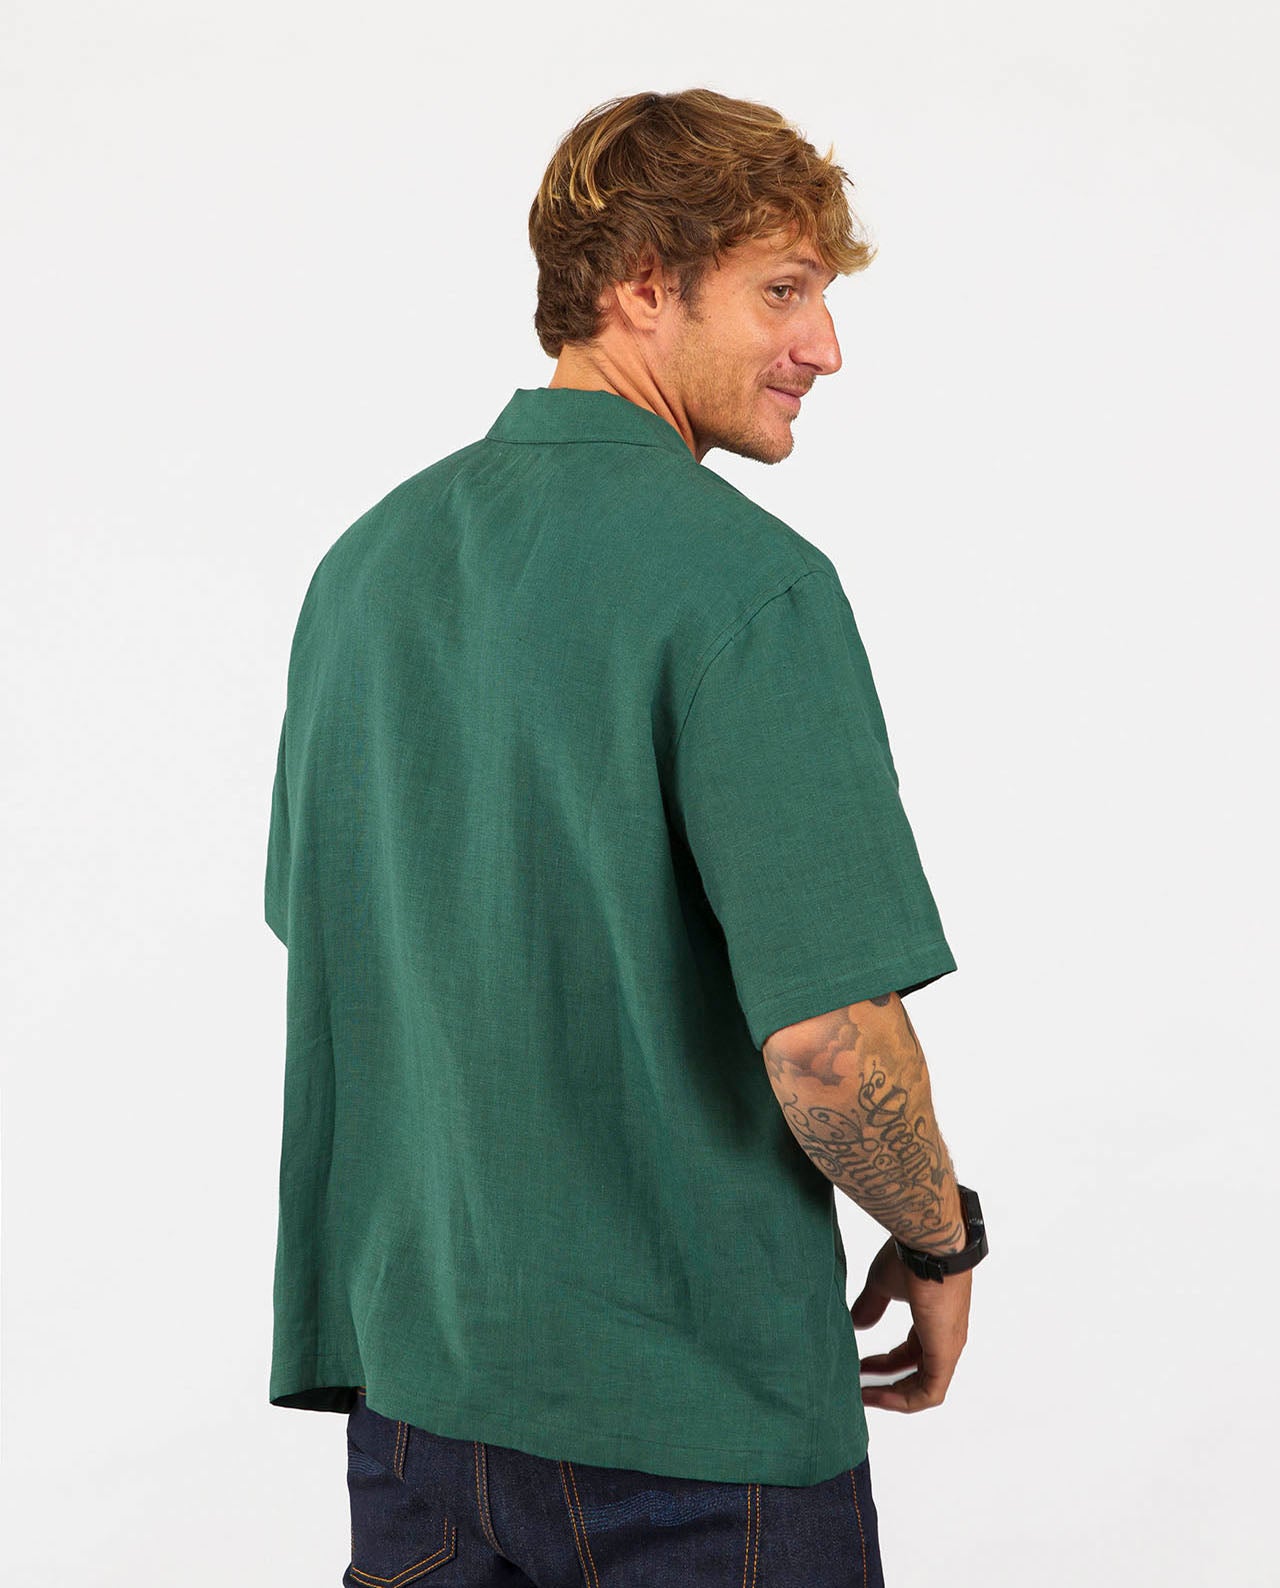 marché commun noyoco chemise homme manches courtes lin vert jade